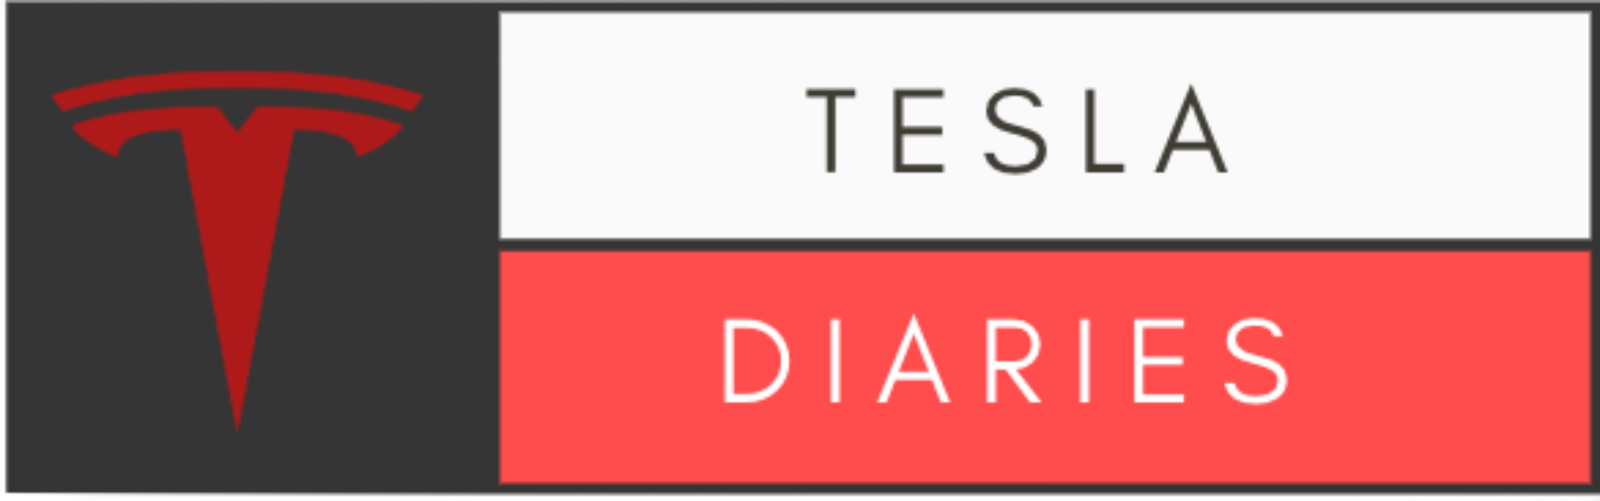 Tesla Diaries